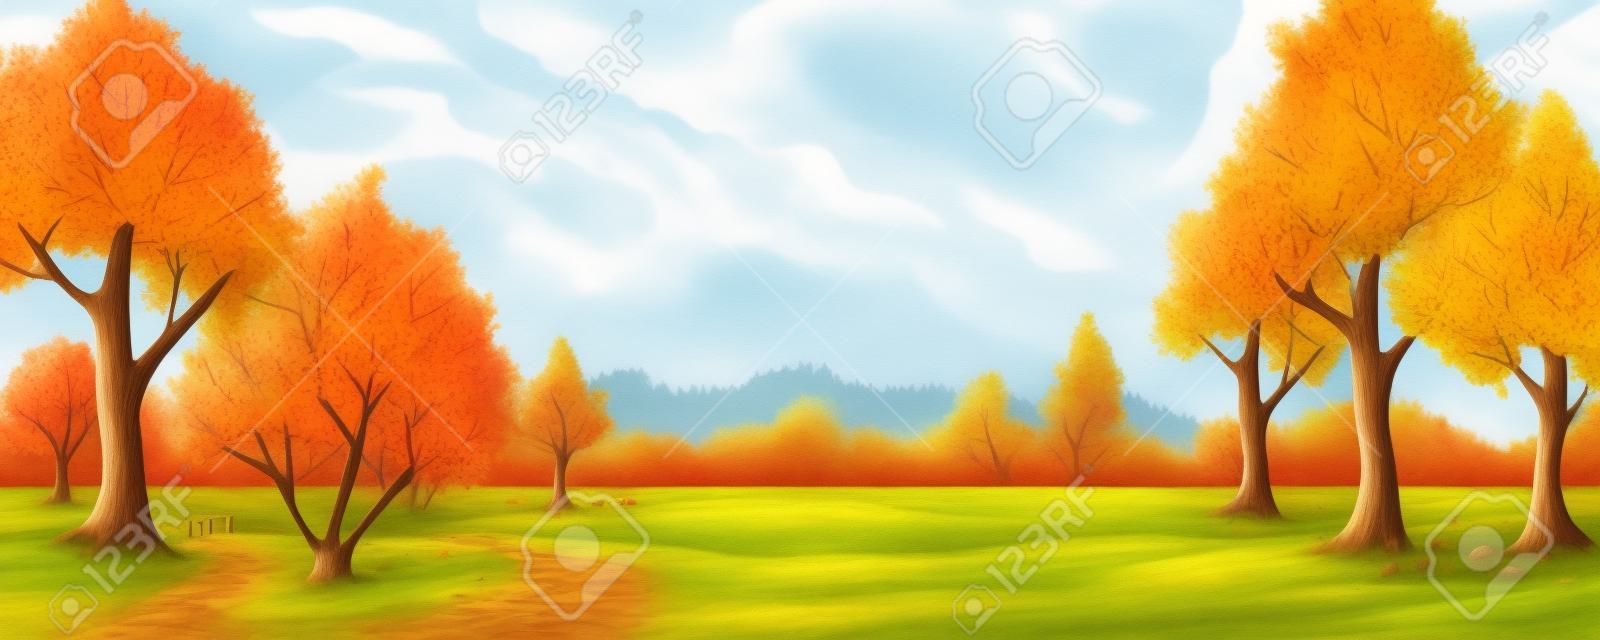 Cartoon illustration of the autumn rural landscape